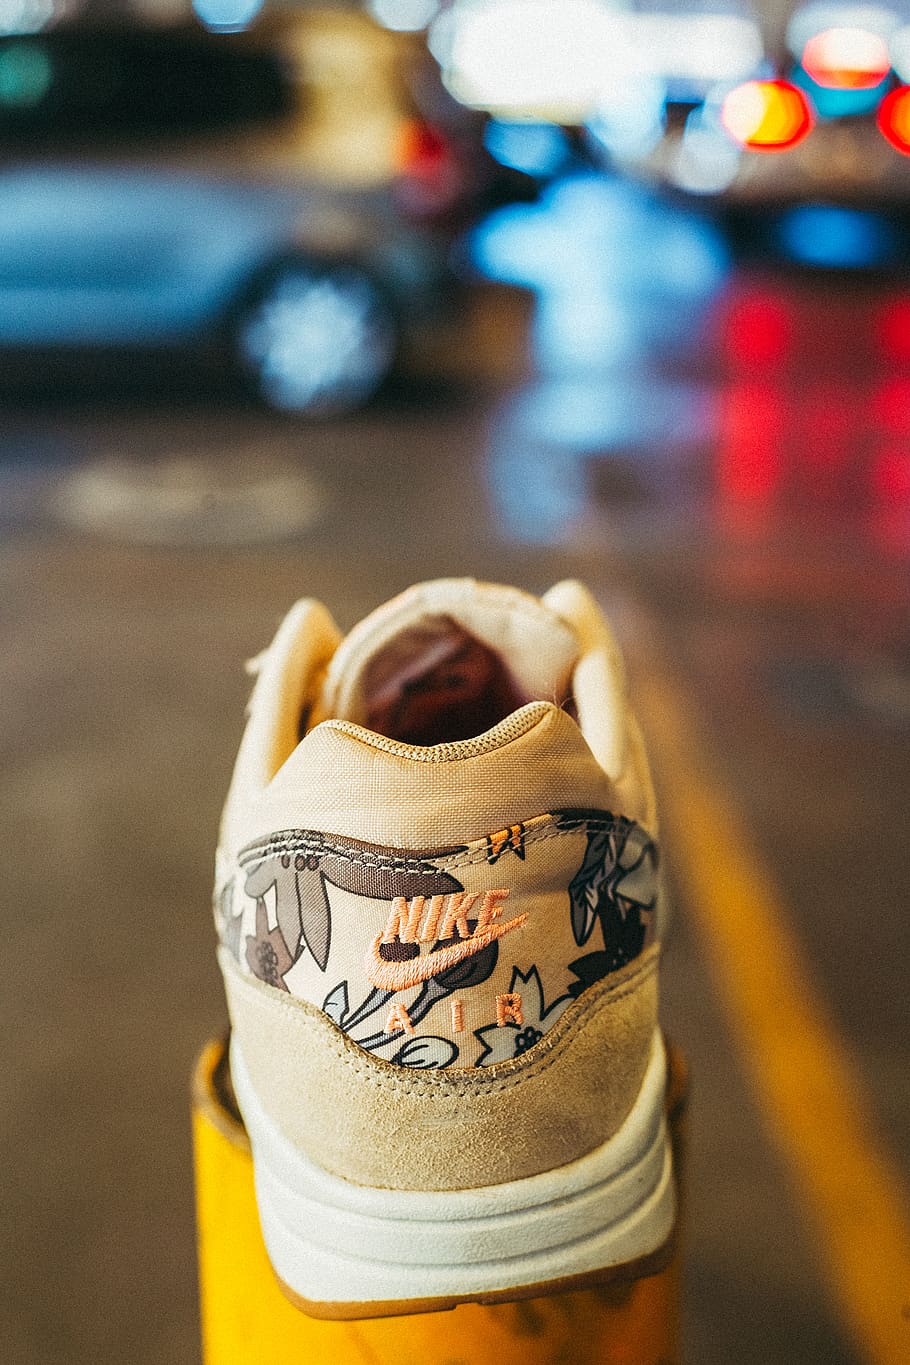 Exclusive Sneakers SA - Walking Through Life